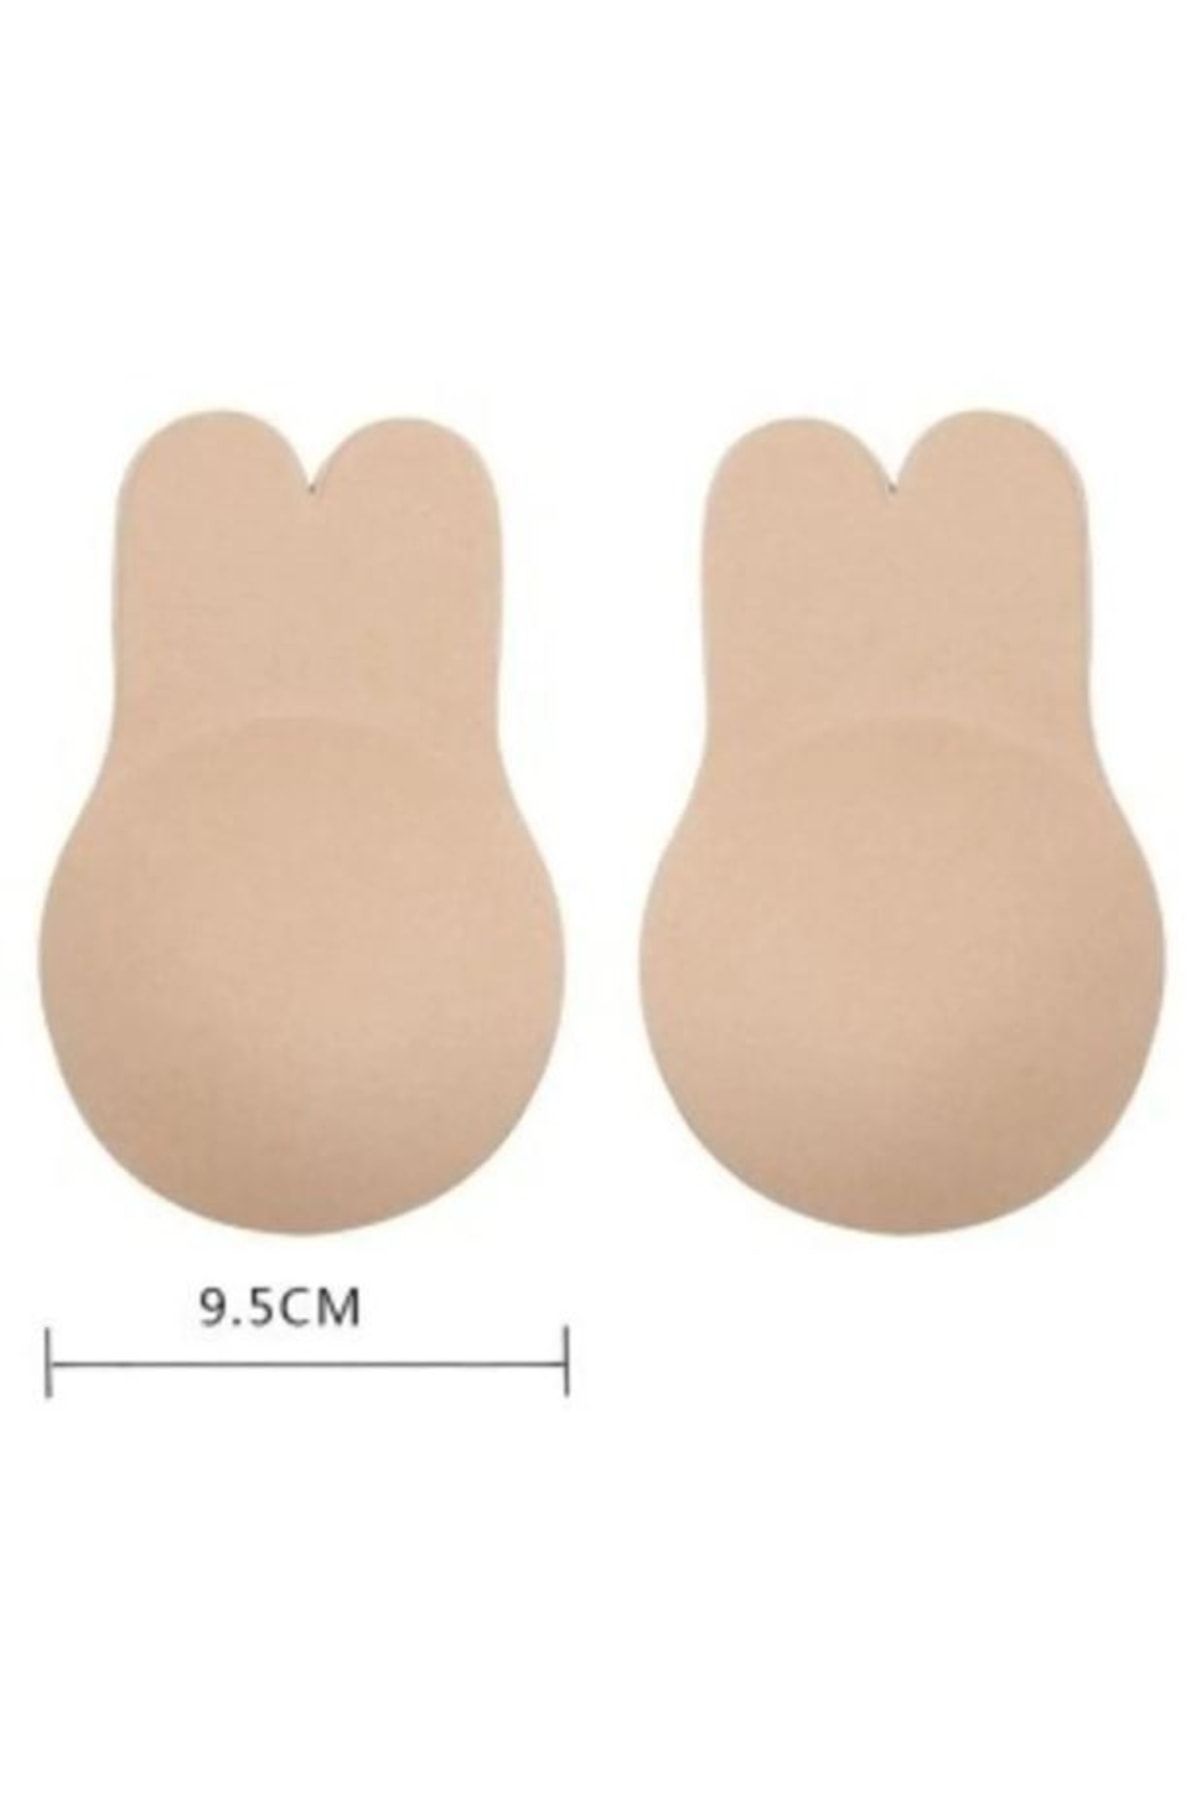 Meba Skin Color Breast Lifting Nipple Hiding Push Up Silicone